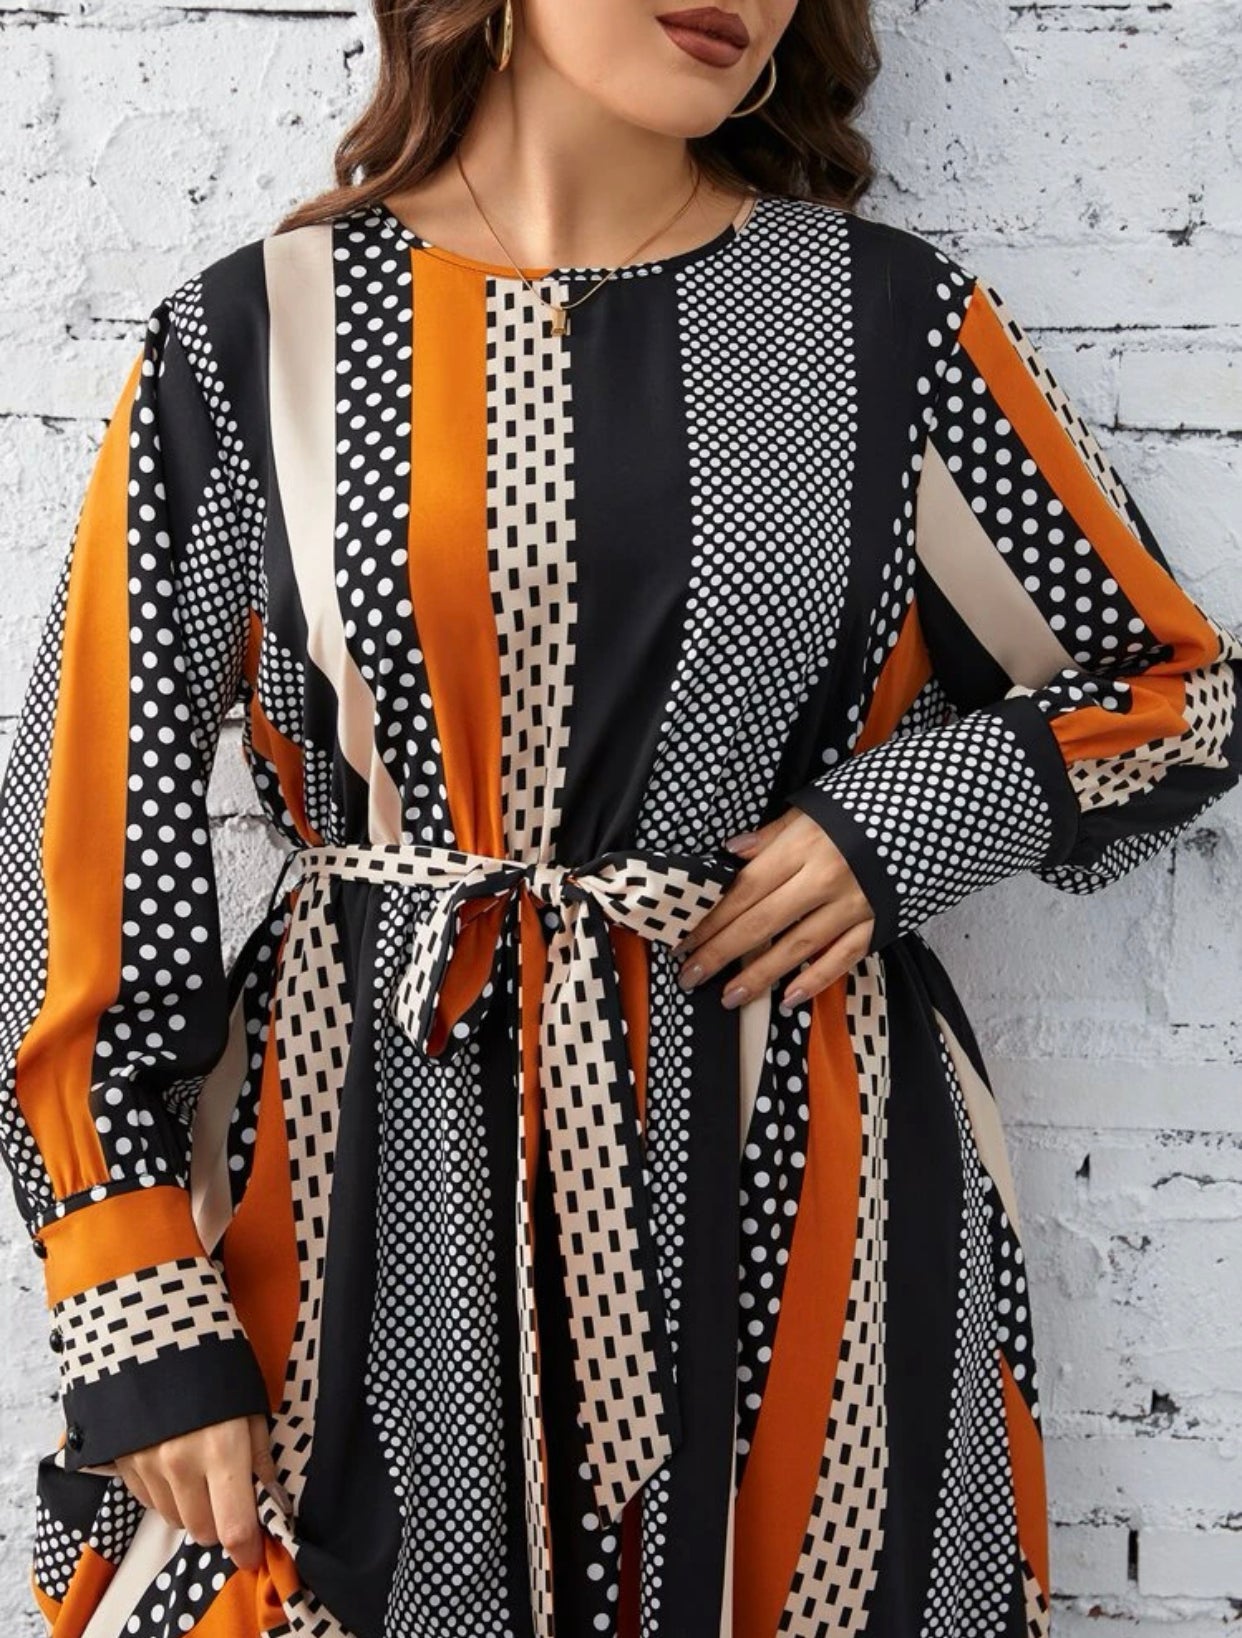 Striped and Polka Dot Print Dress, US Sizes 12 - 20